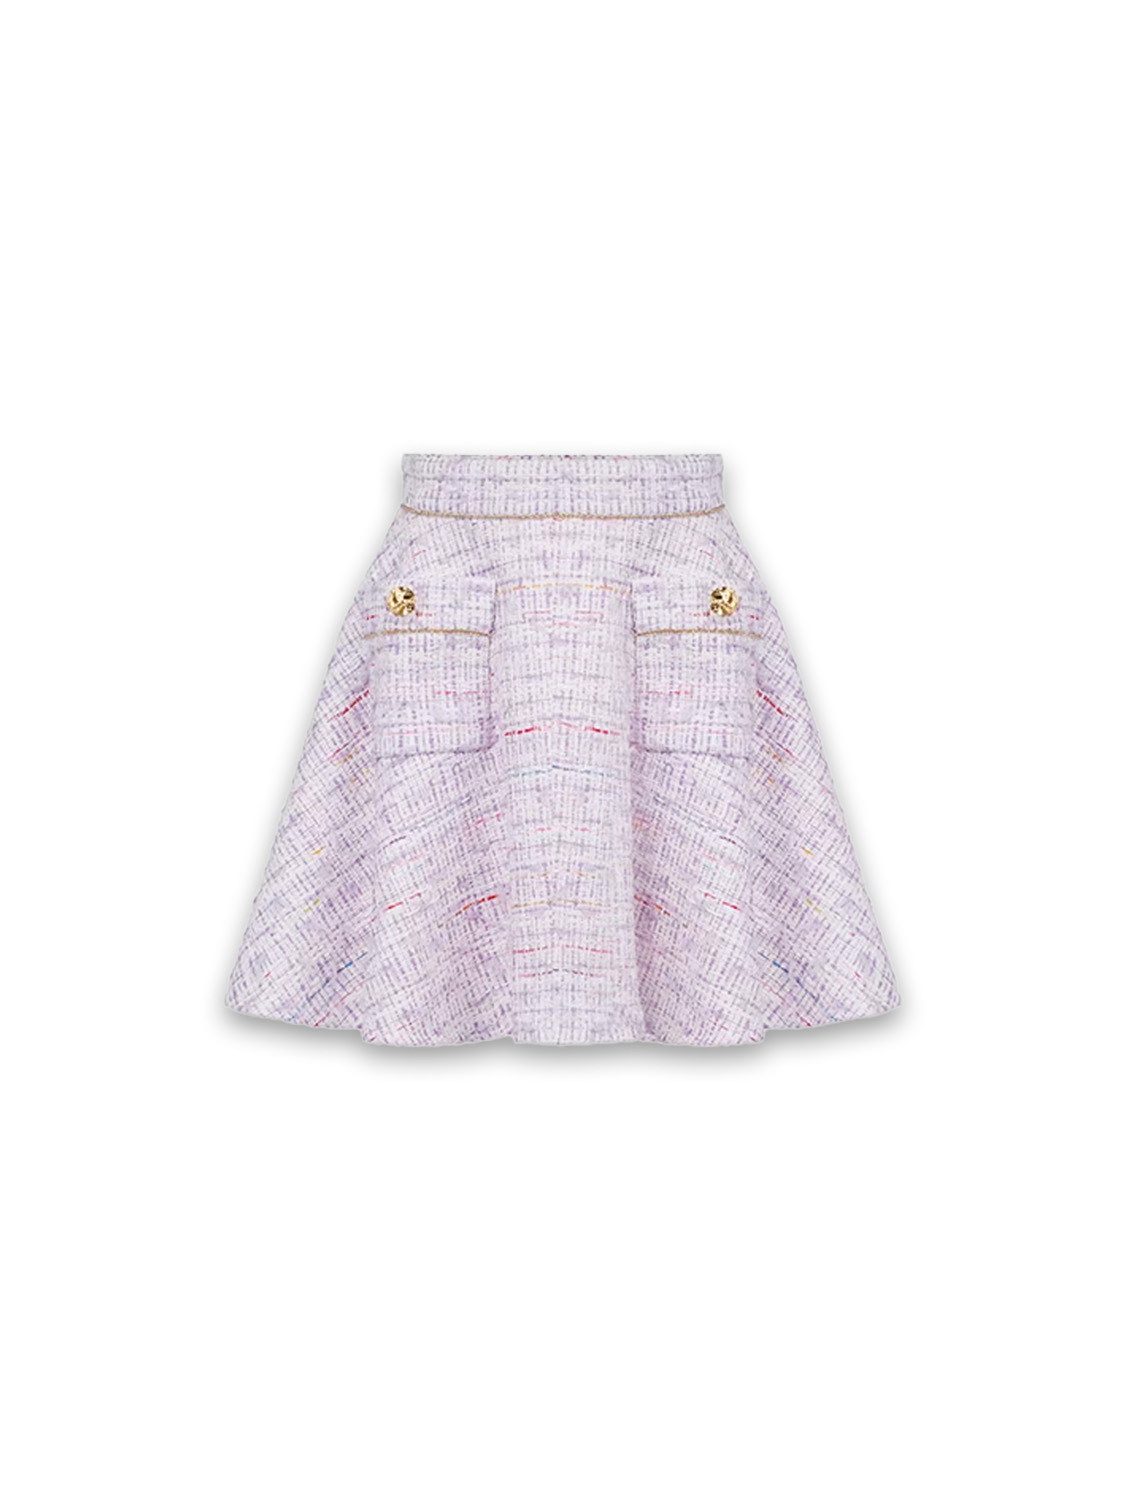 Nina Ricci Ausgestellter Tweed-Minirock mit Lurex-Effekten  rosa 36